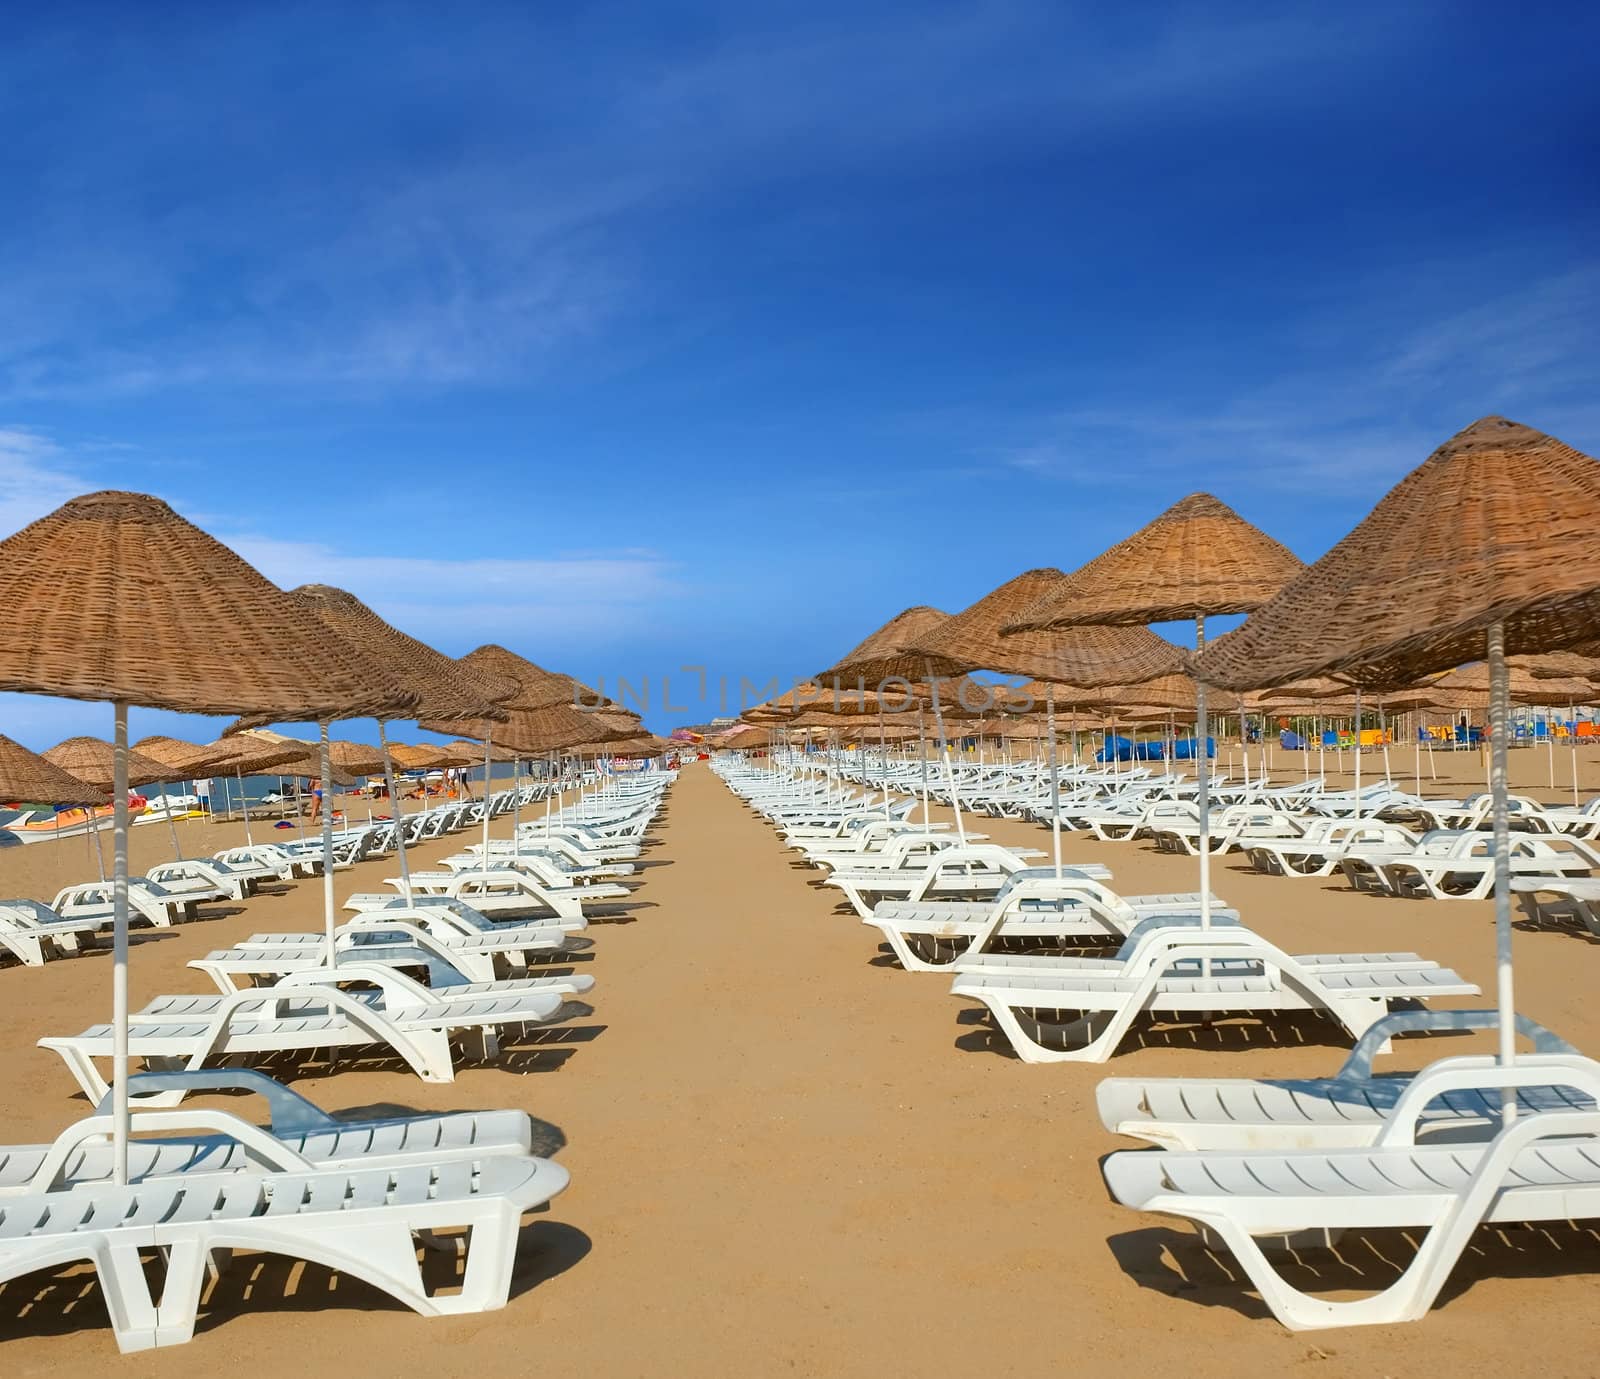 Beach chairs on a sandy beach in Turkey